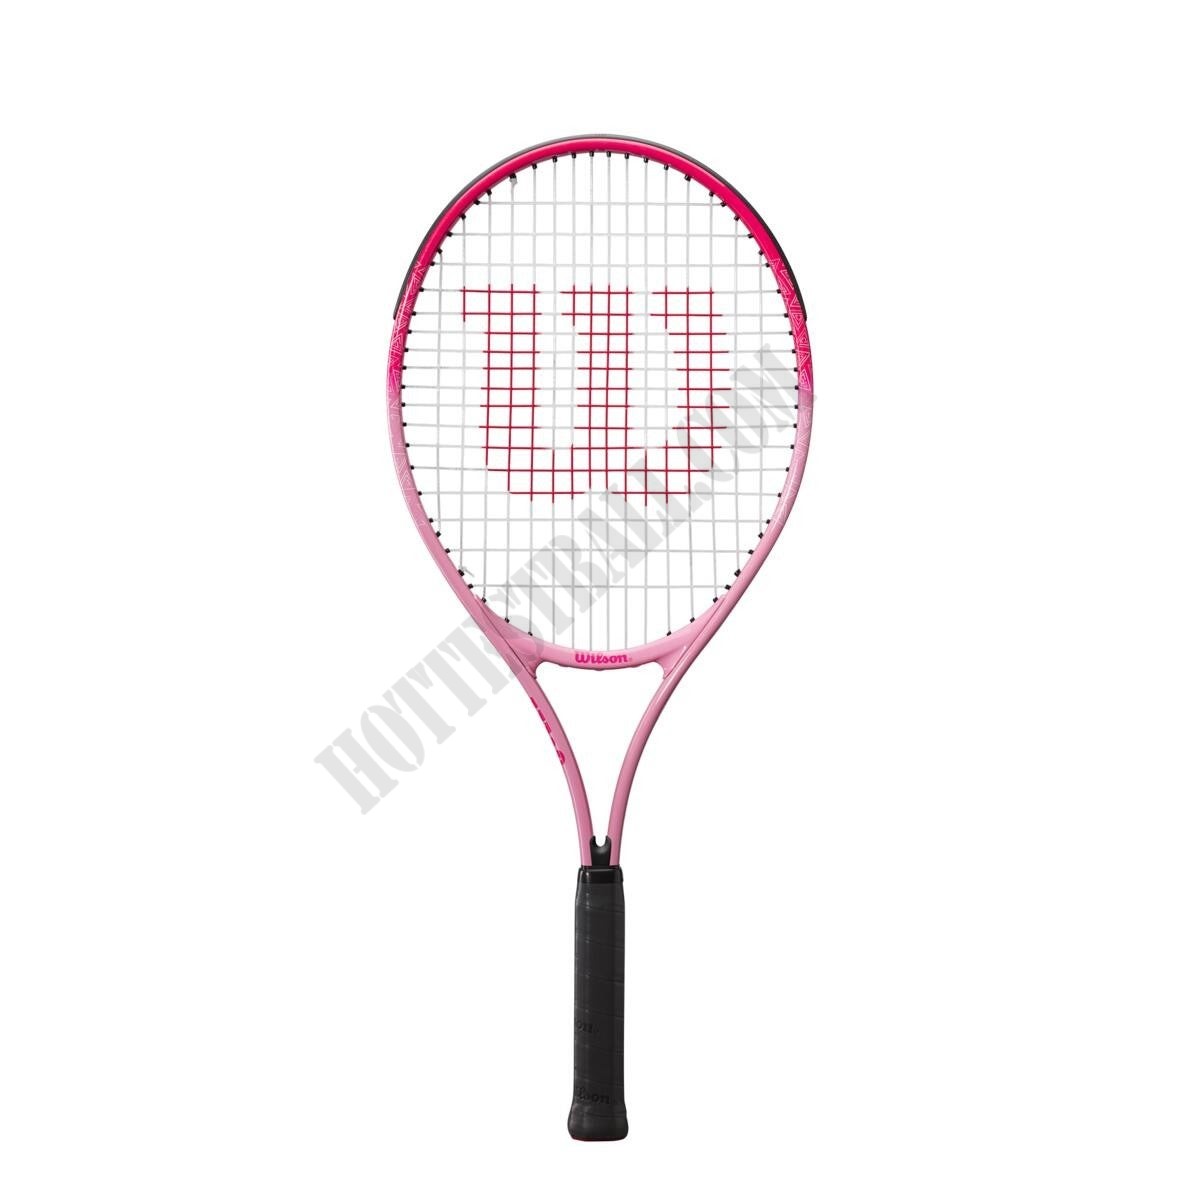 Burn Pink 25 Tennis Racket - Wilson Discount Store - Burn Pink 25 Tennis Racket - Wilson Discount Store